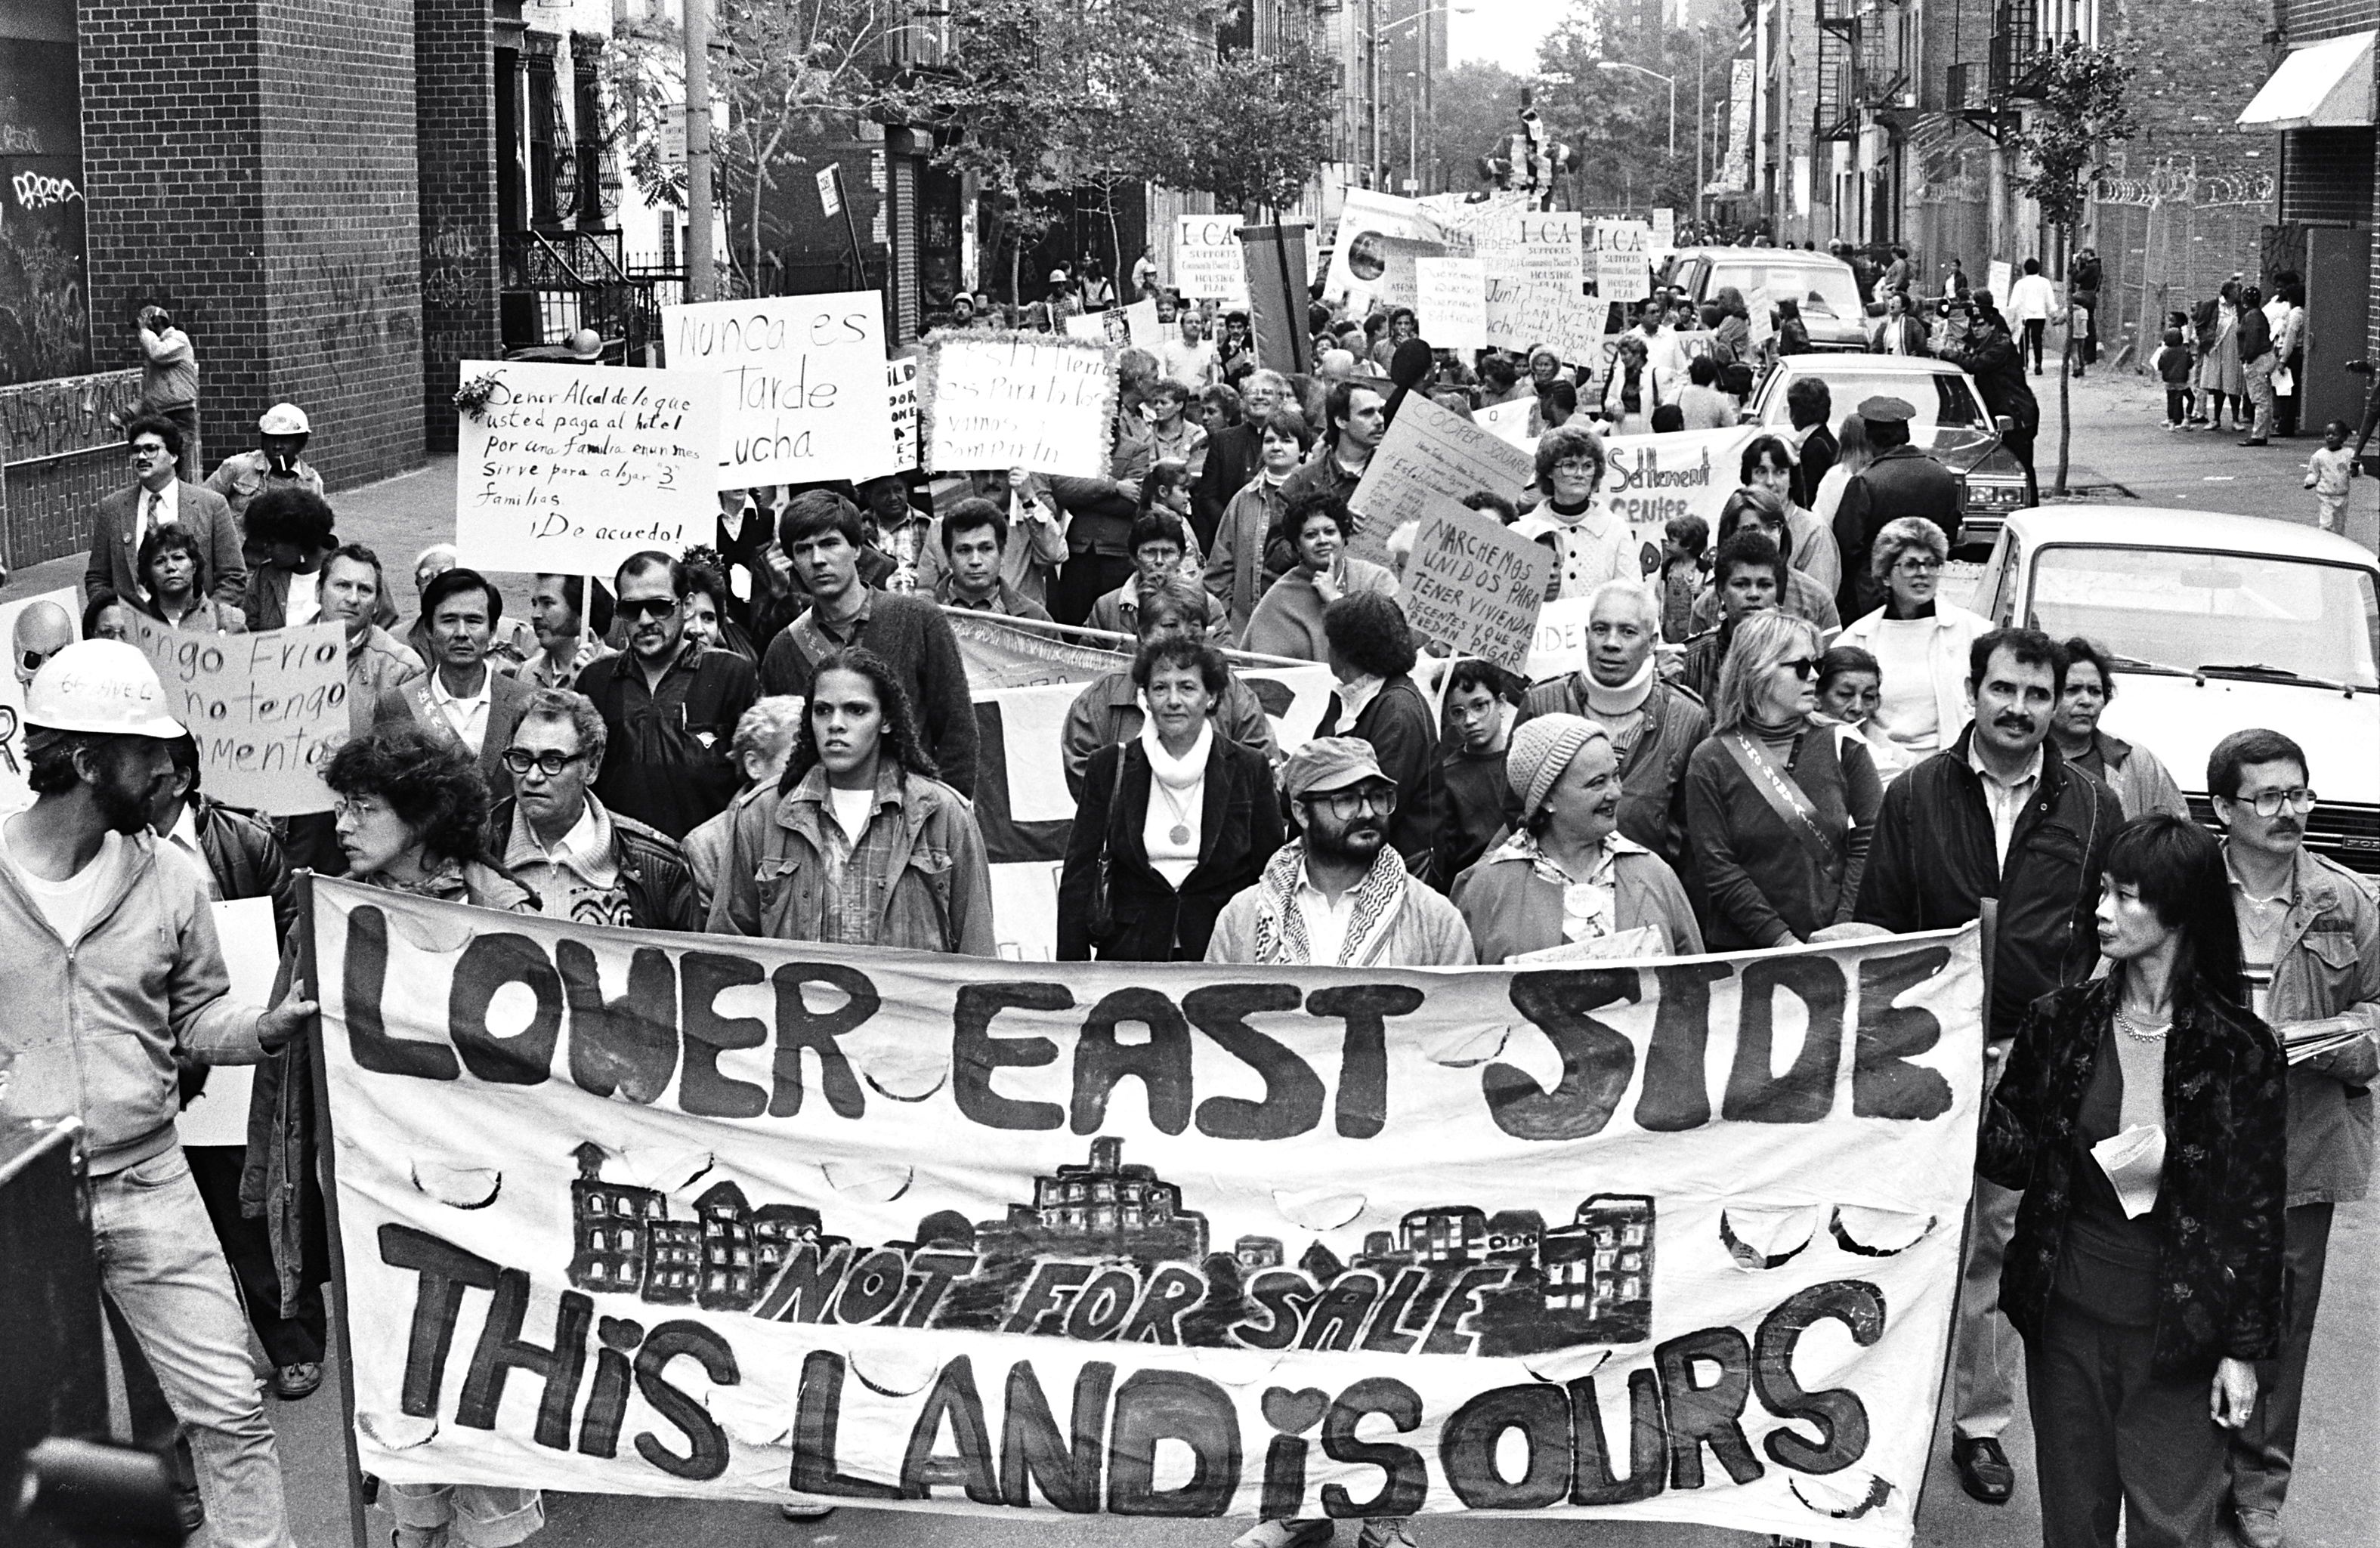 Lower East Side 거리를 행진하는 성인 그룹의 흑백 사진. 앞쪽에 있는 사람들은 "로어 이스트 사이드. 이 땅은 우리 땅입니다."라고 적힌 배너를 들고 있습니다.